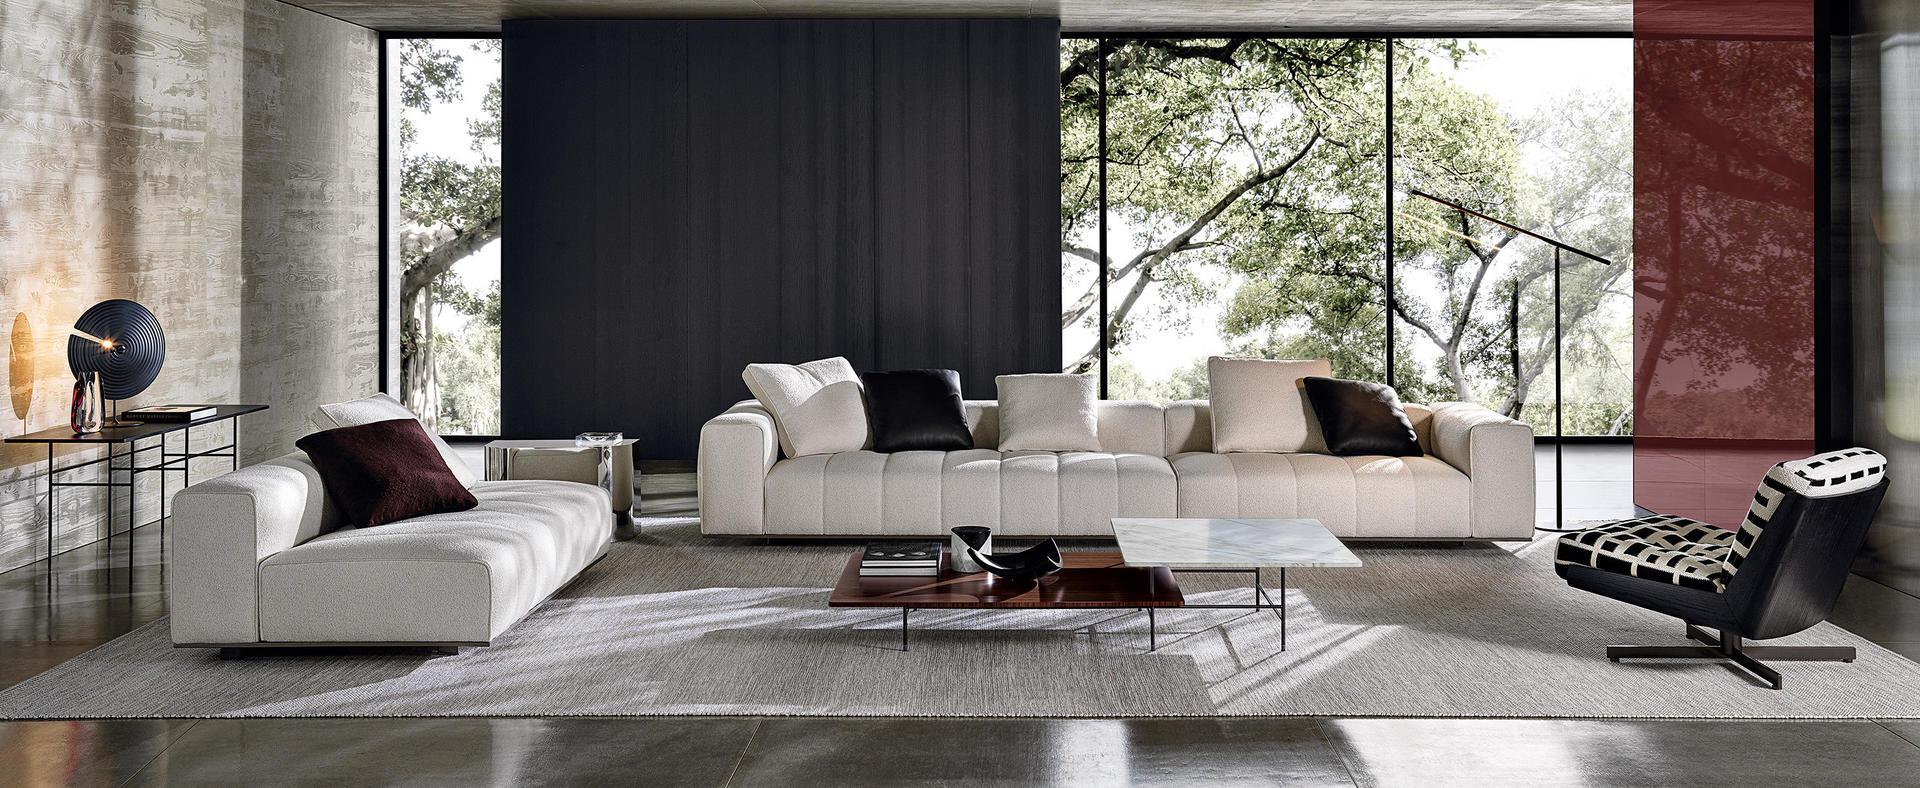 HORA Barneveld Minotti Goodman bank modulaire sofa design meubelen designmeubelen 4.jpg